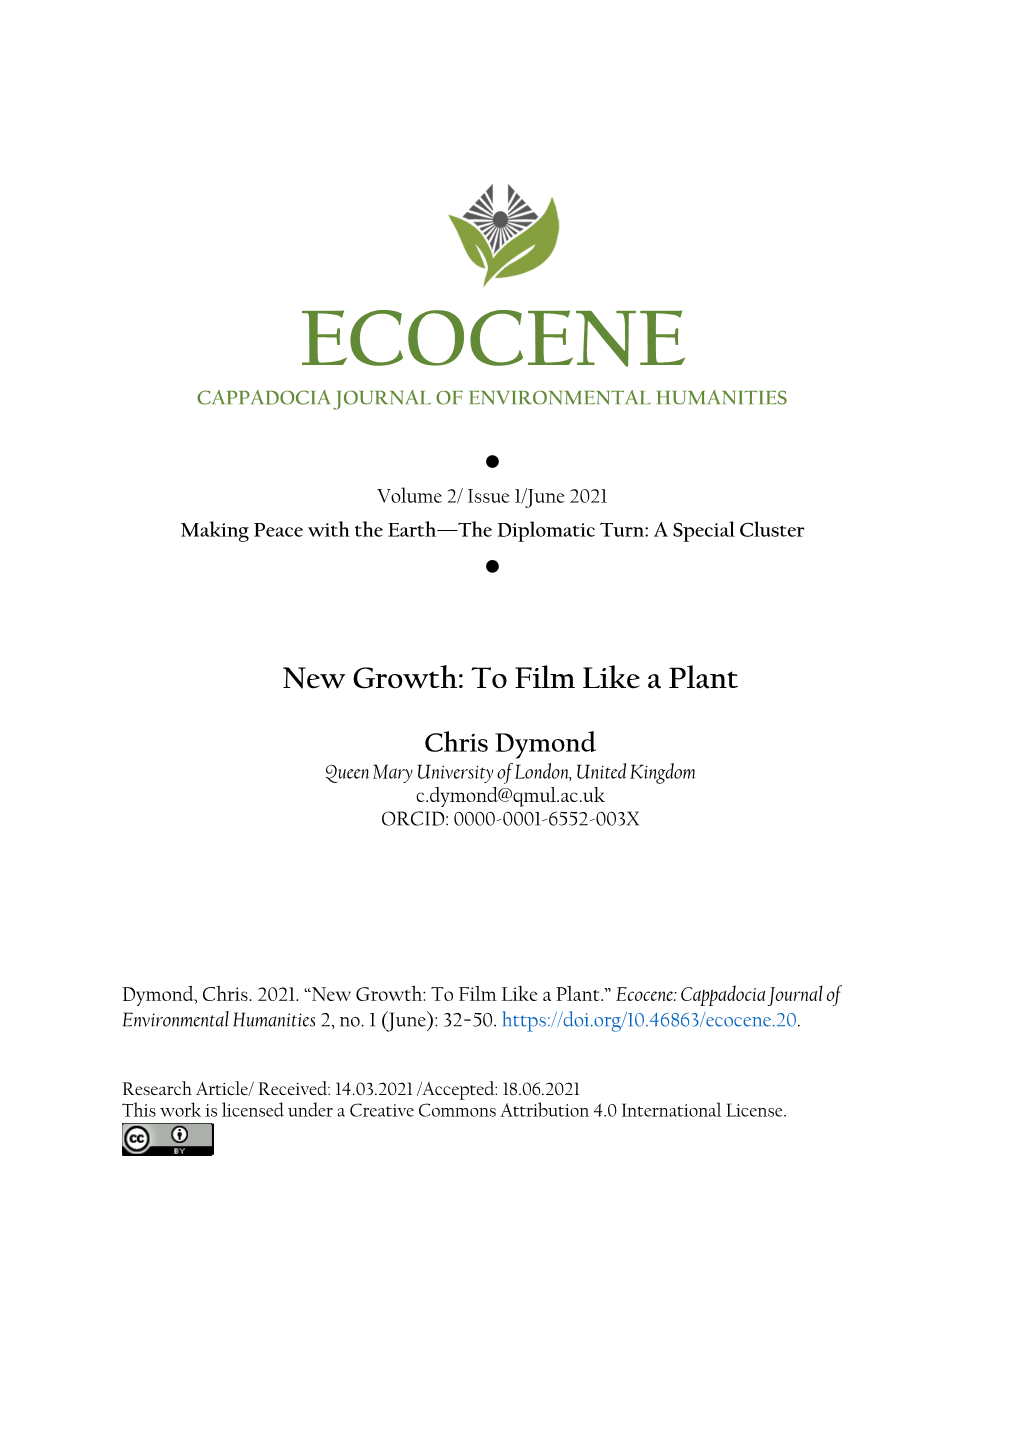 Ecocene: Cappadocia Journal of Environmental Humanities 2, No